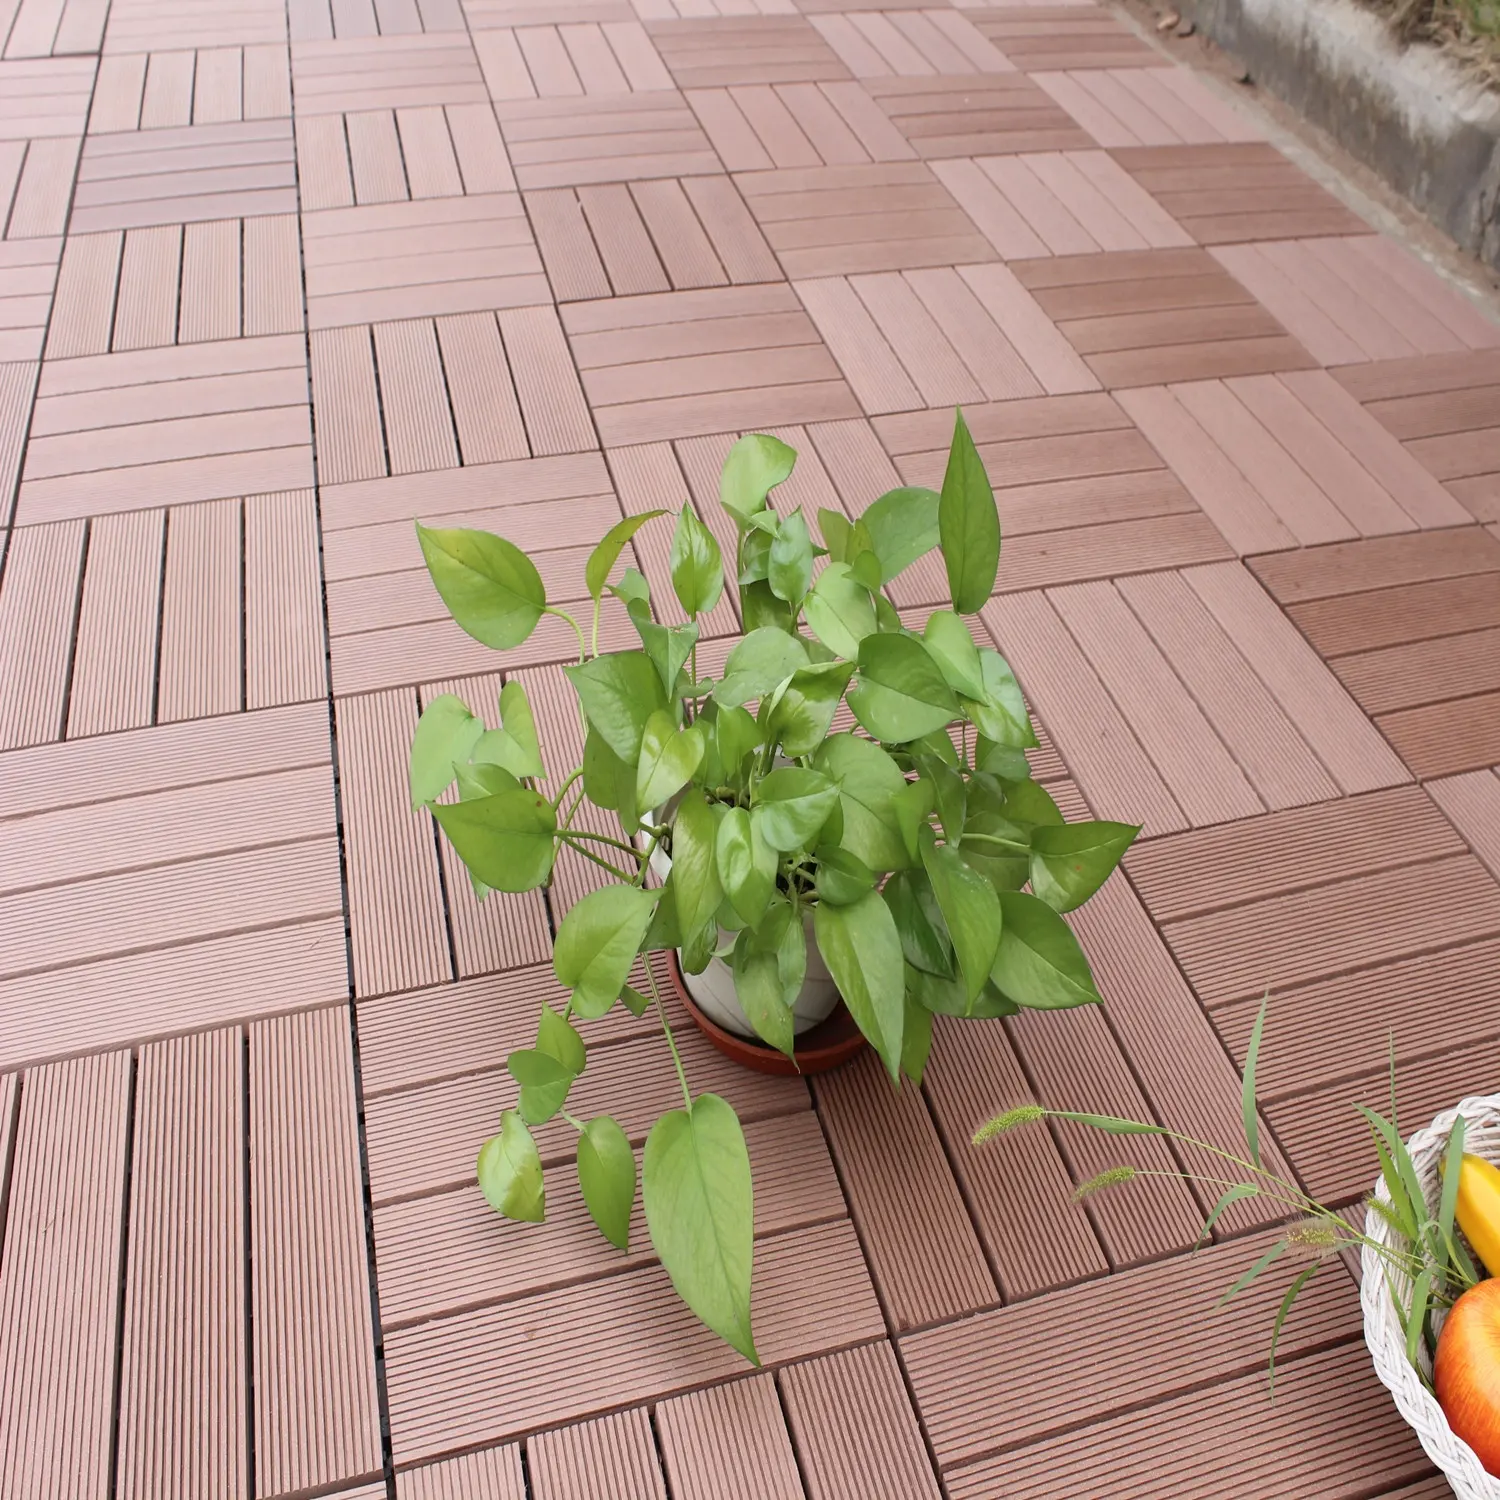 Cheap Wood Plastic Garden Path Floor Tiles Composite Path Interlocking Decking Tiles